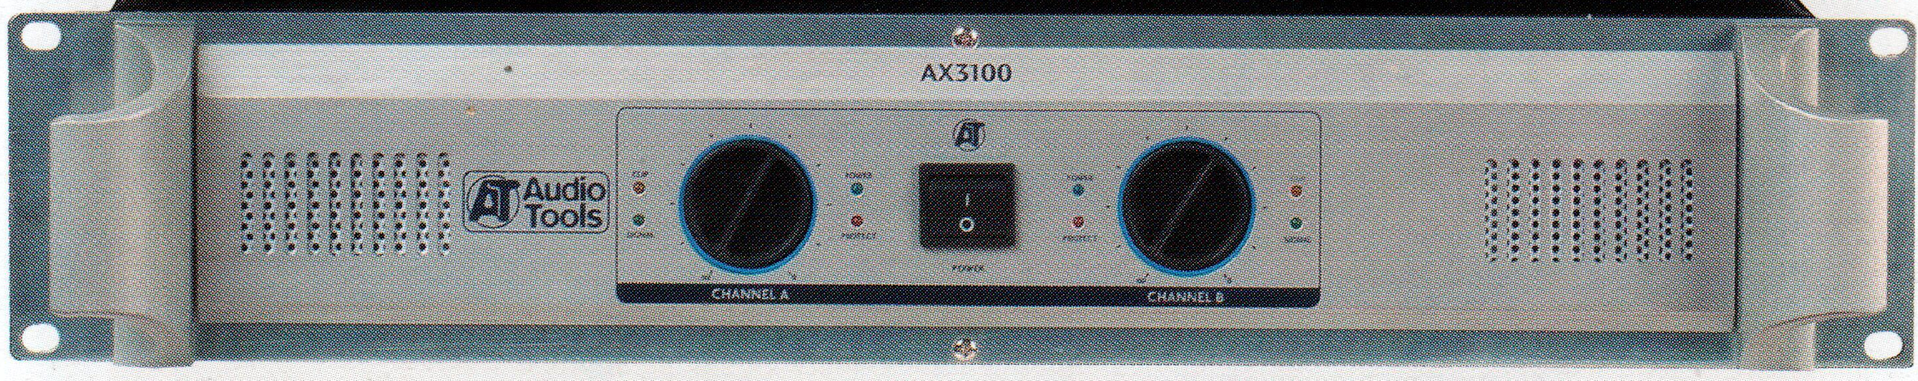 AUDIO TOOLS - AX3100 - AMPLIFICATORE 3100W